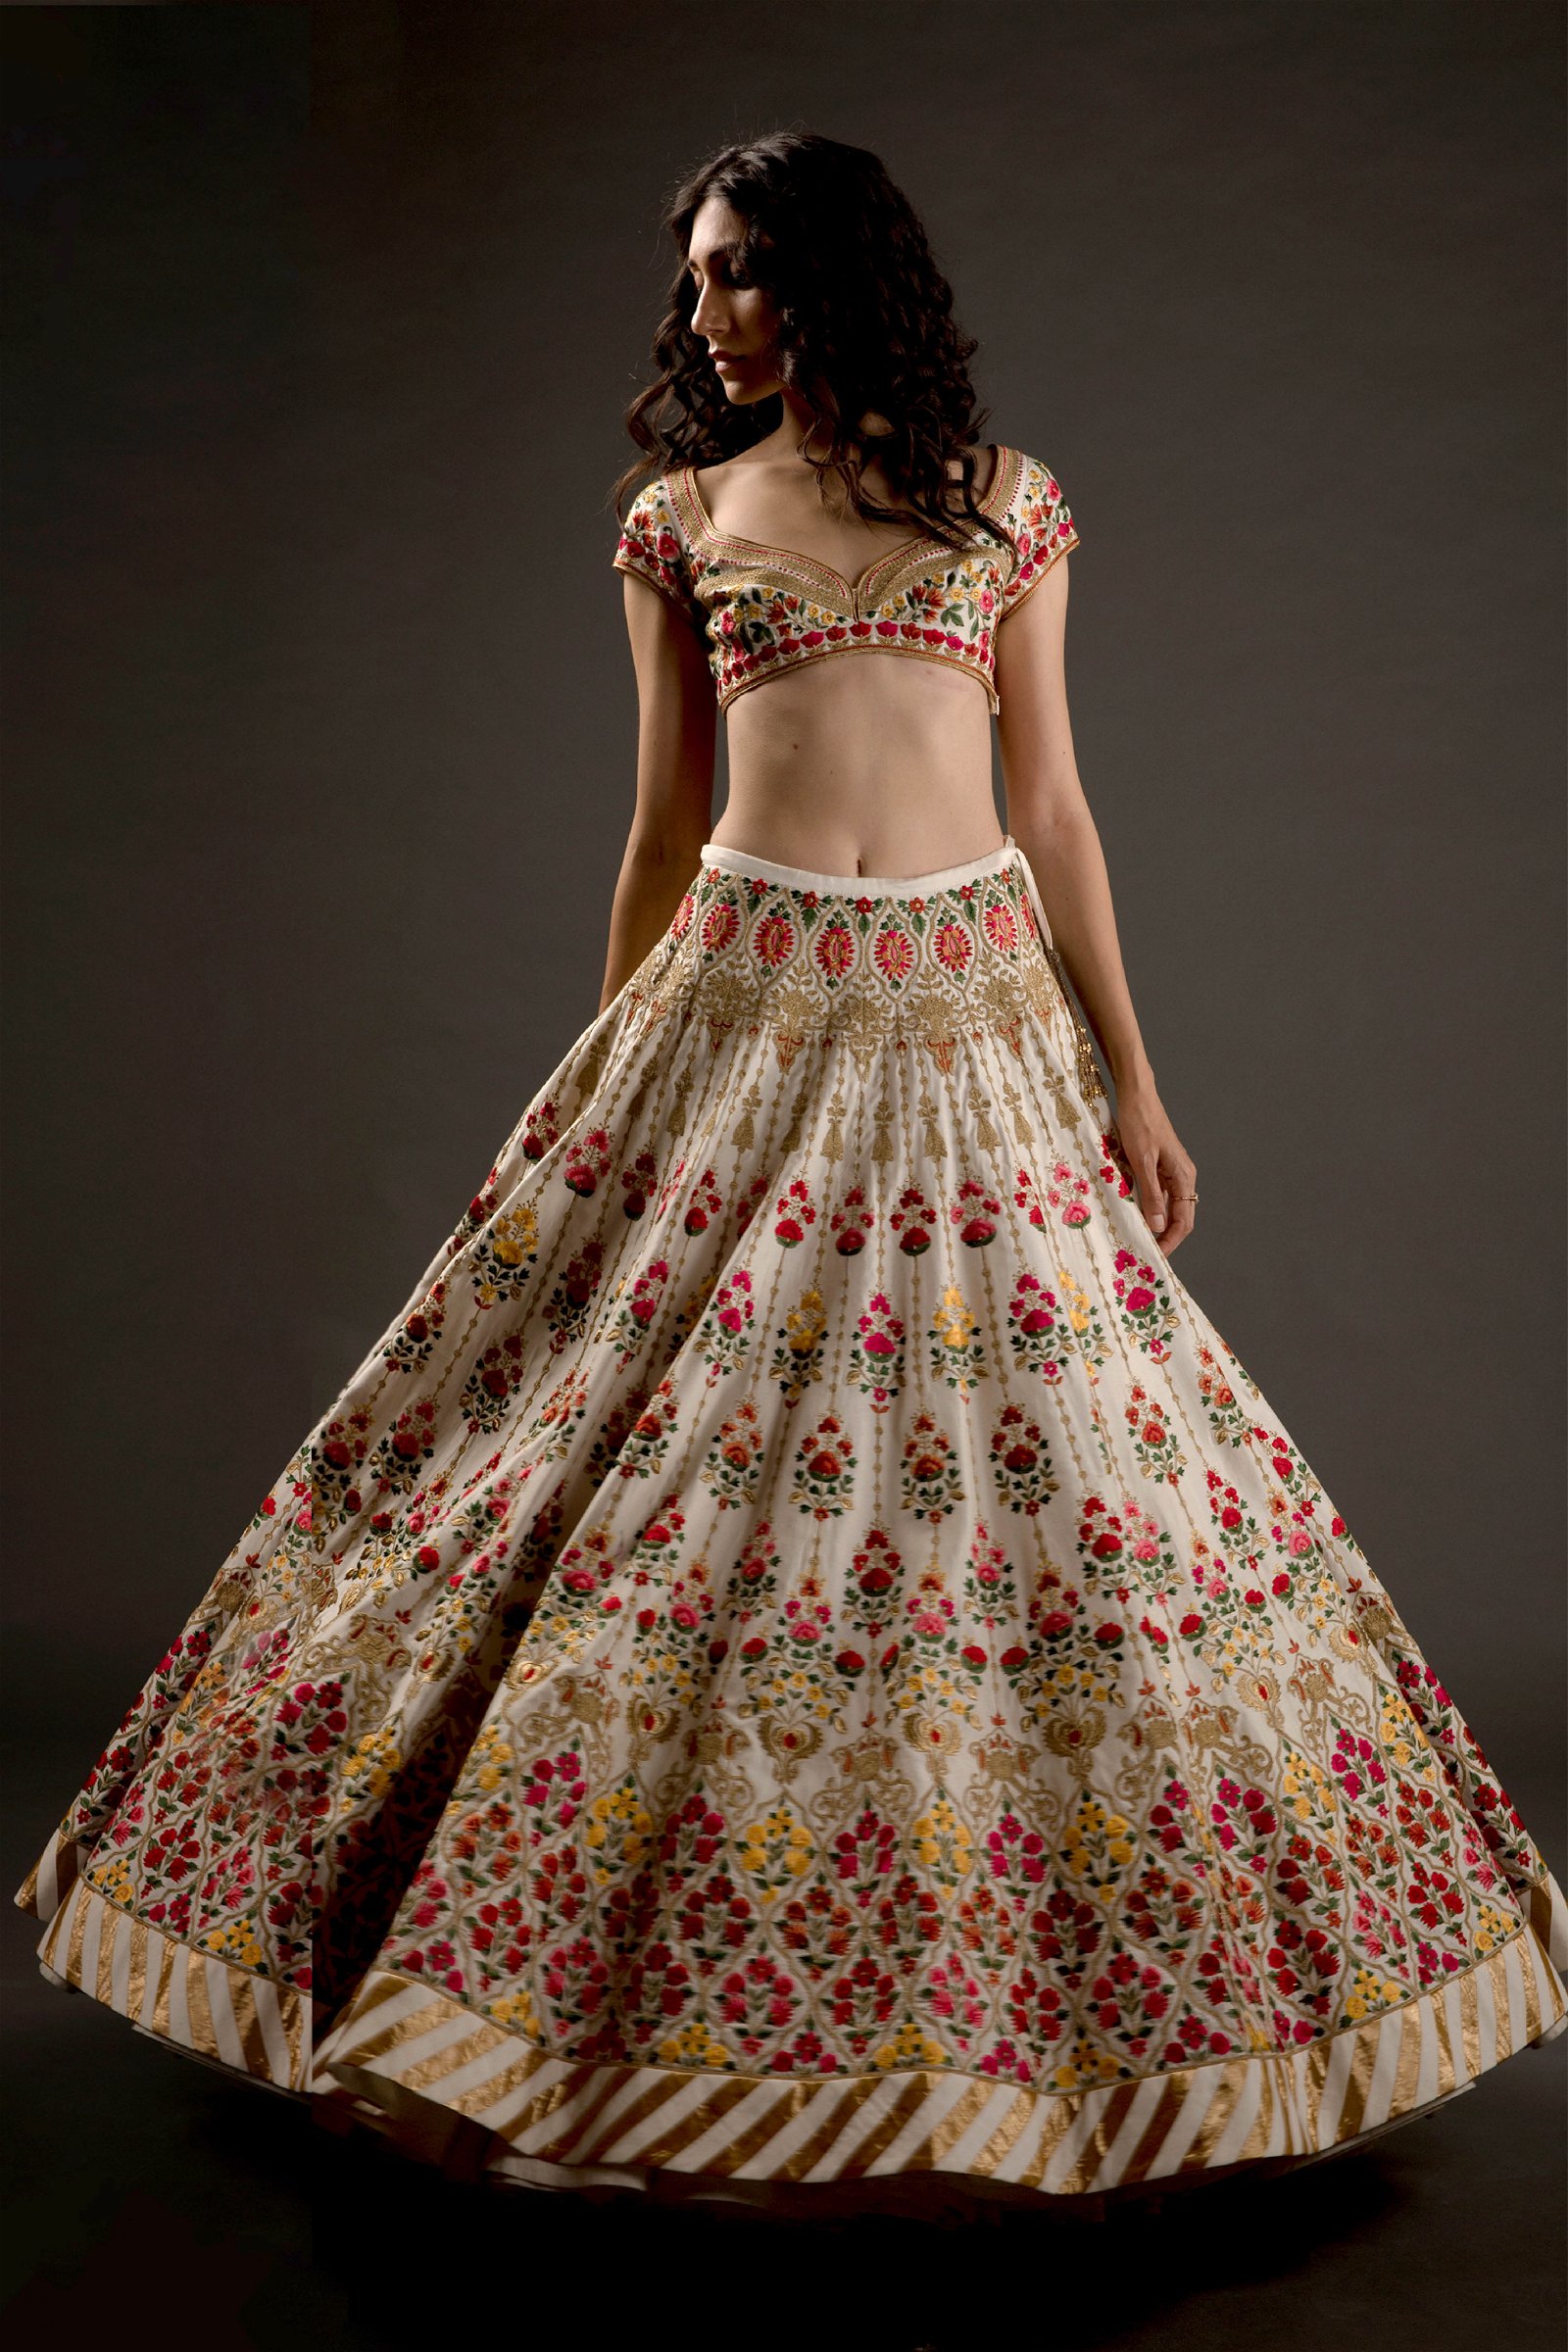 beautiful-india | Rohit bal, Indian fashion, Indian couture